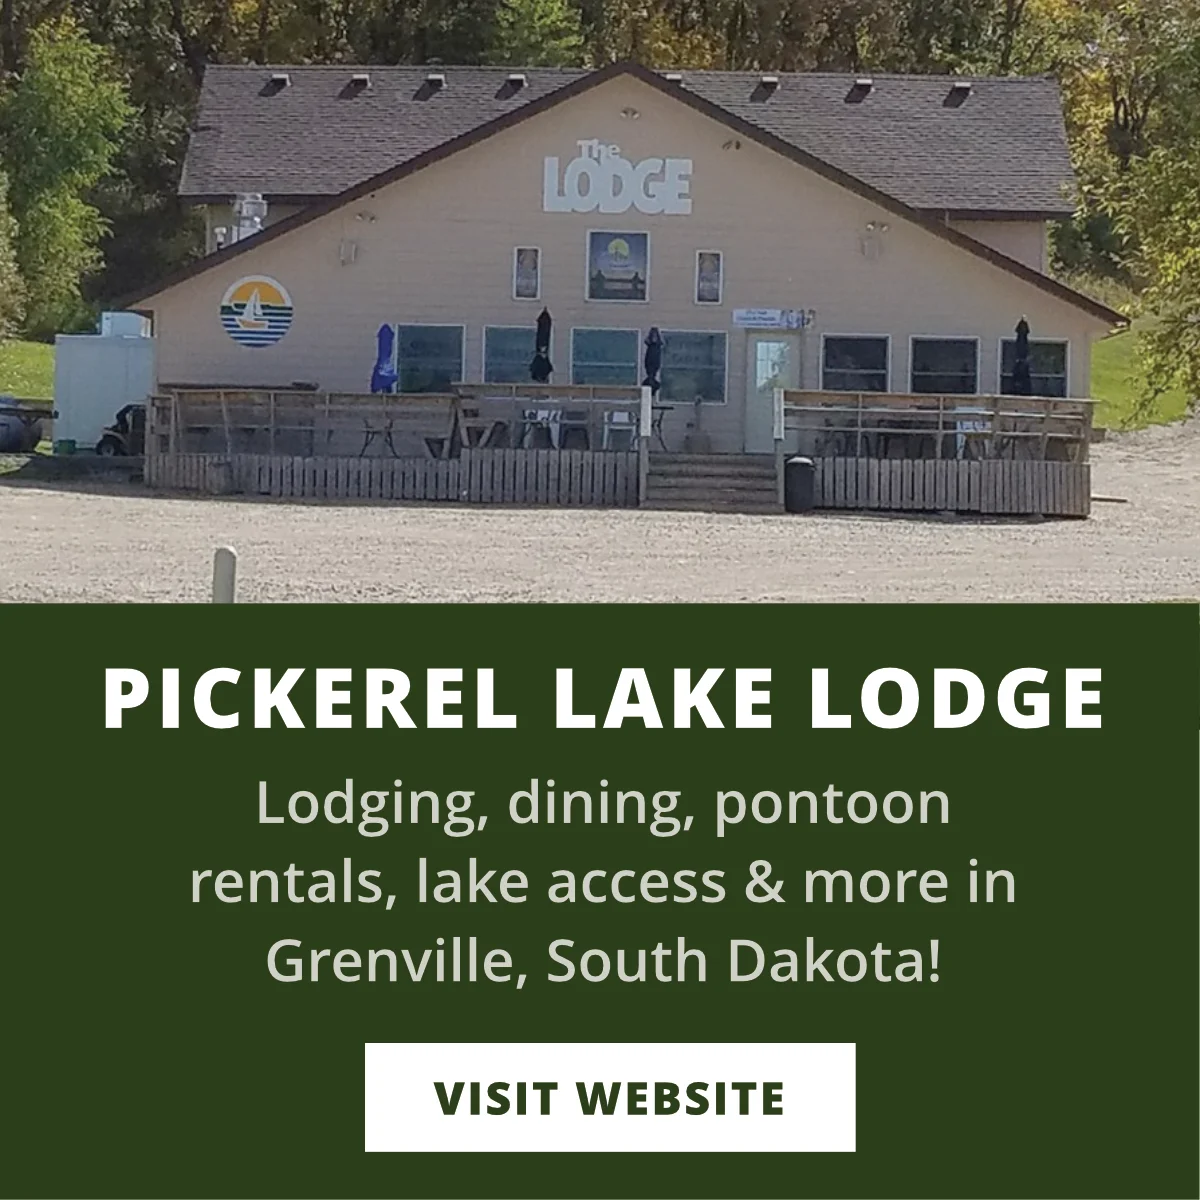 Pickerel Lake Lodge - Lodging, Dining, pontoon rentals, lake access, and more!  Grenville, SD.  Visit website.